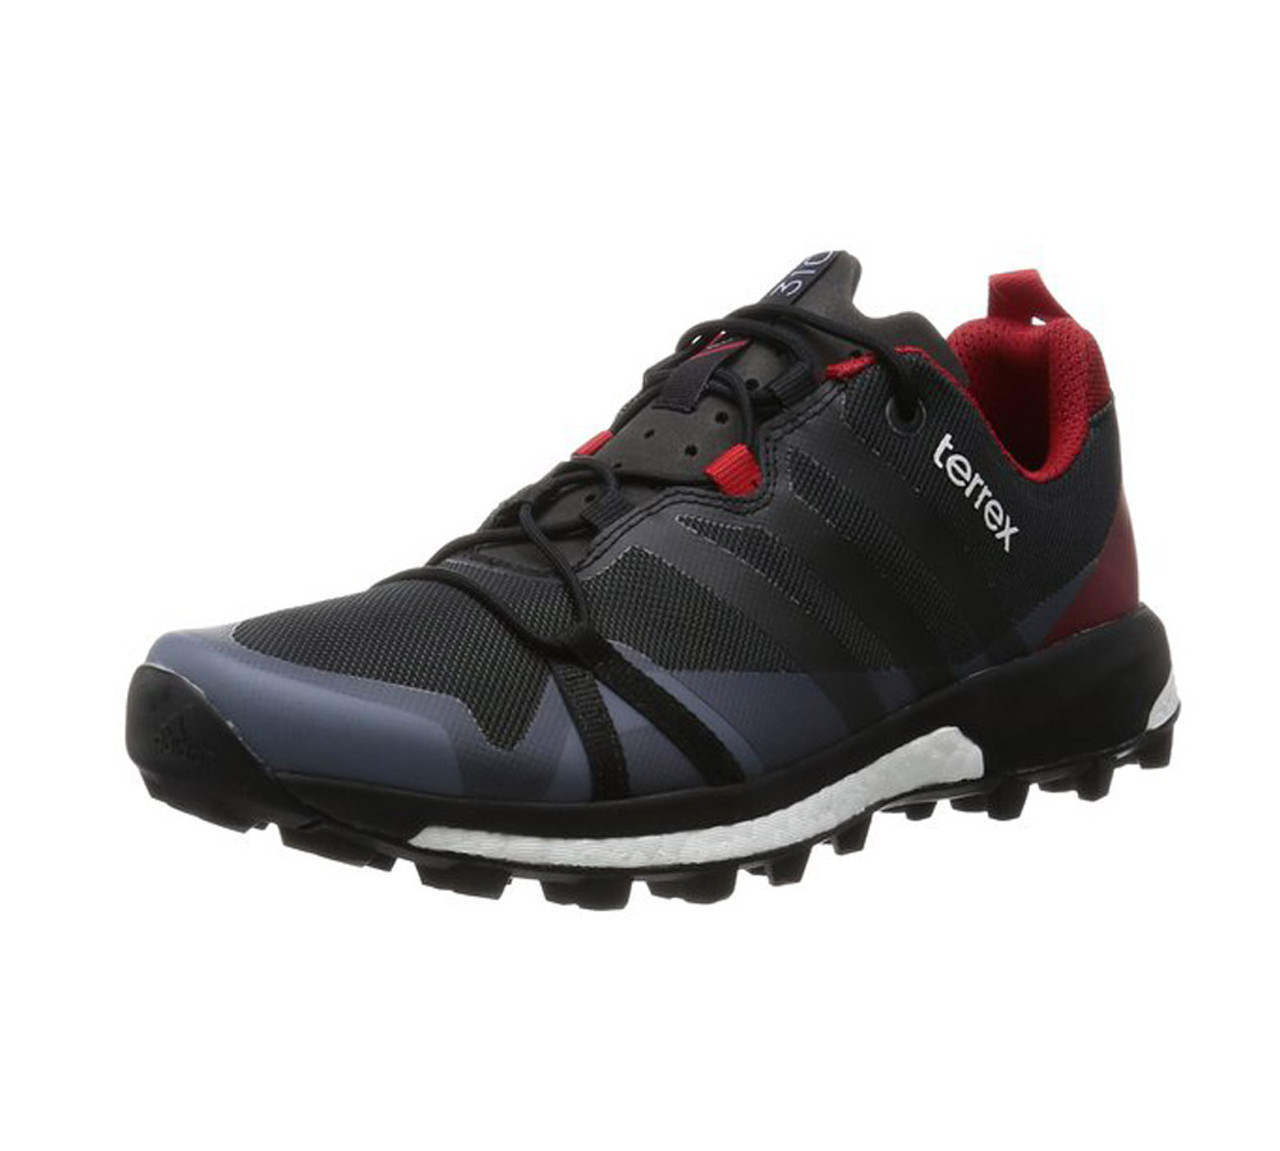 Adidas Men's Terrex Agravic Trail Runner - Grey | Discount Men's Athletic Shoes More - Shoolu.com | Shoolu.com